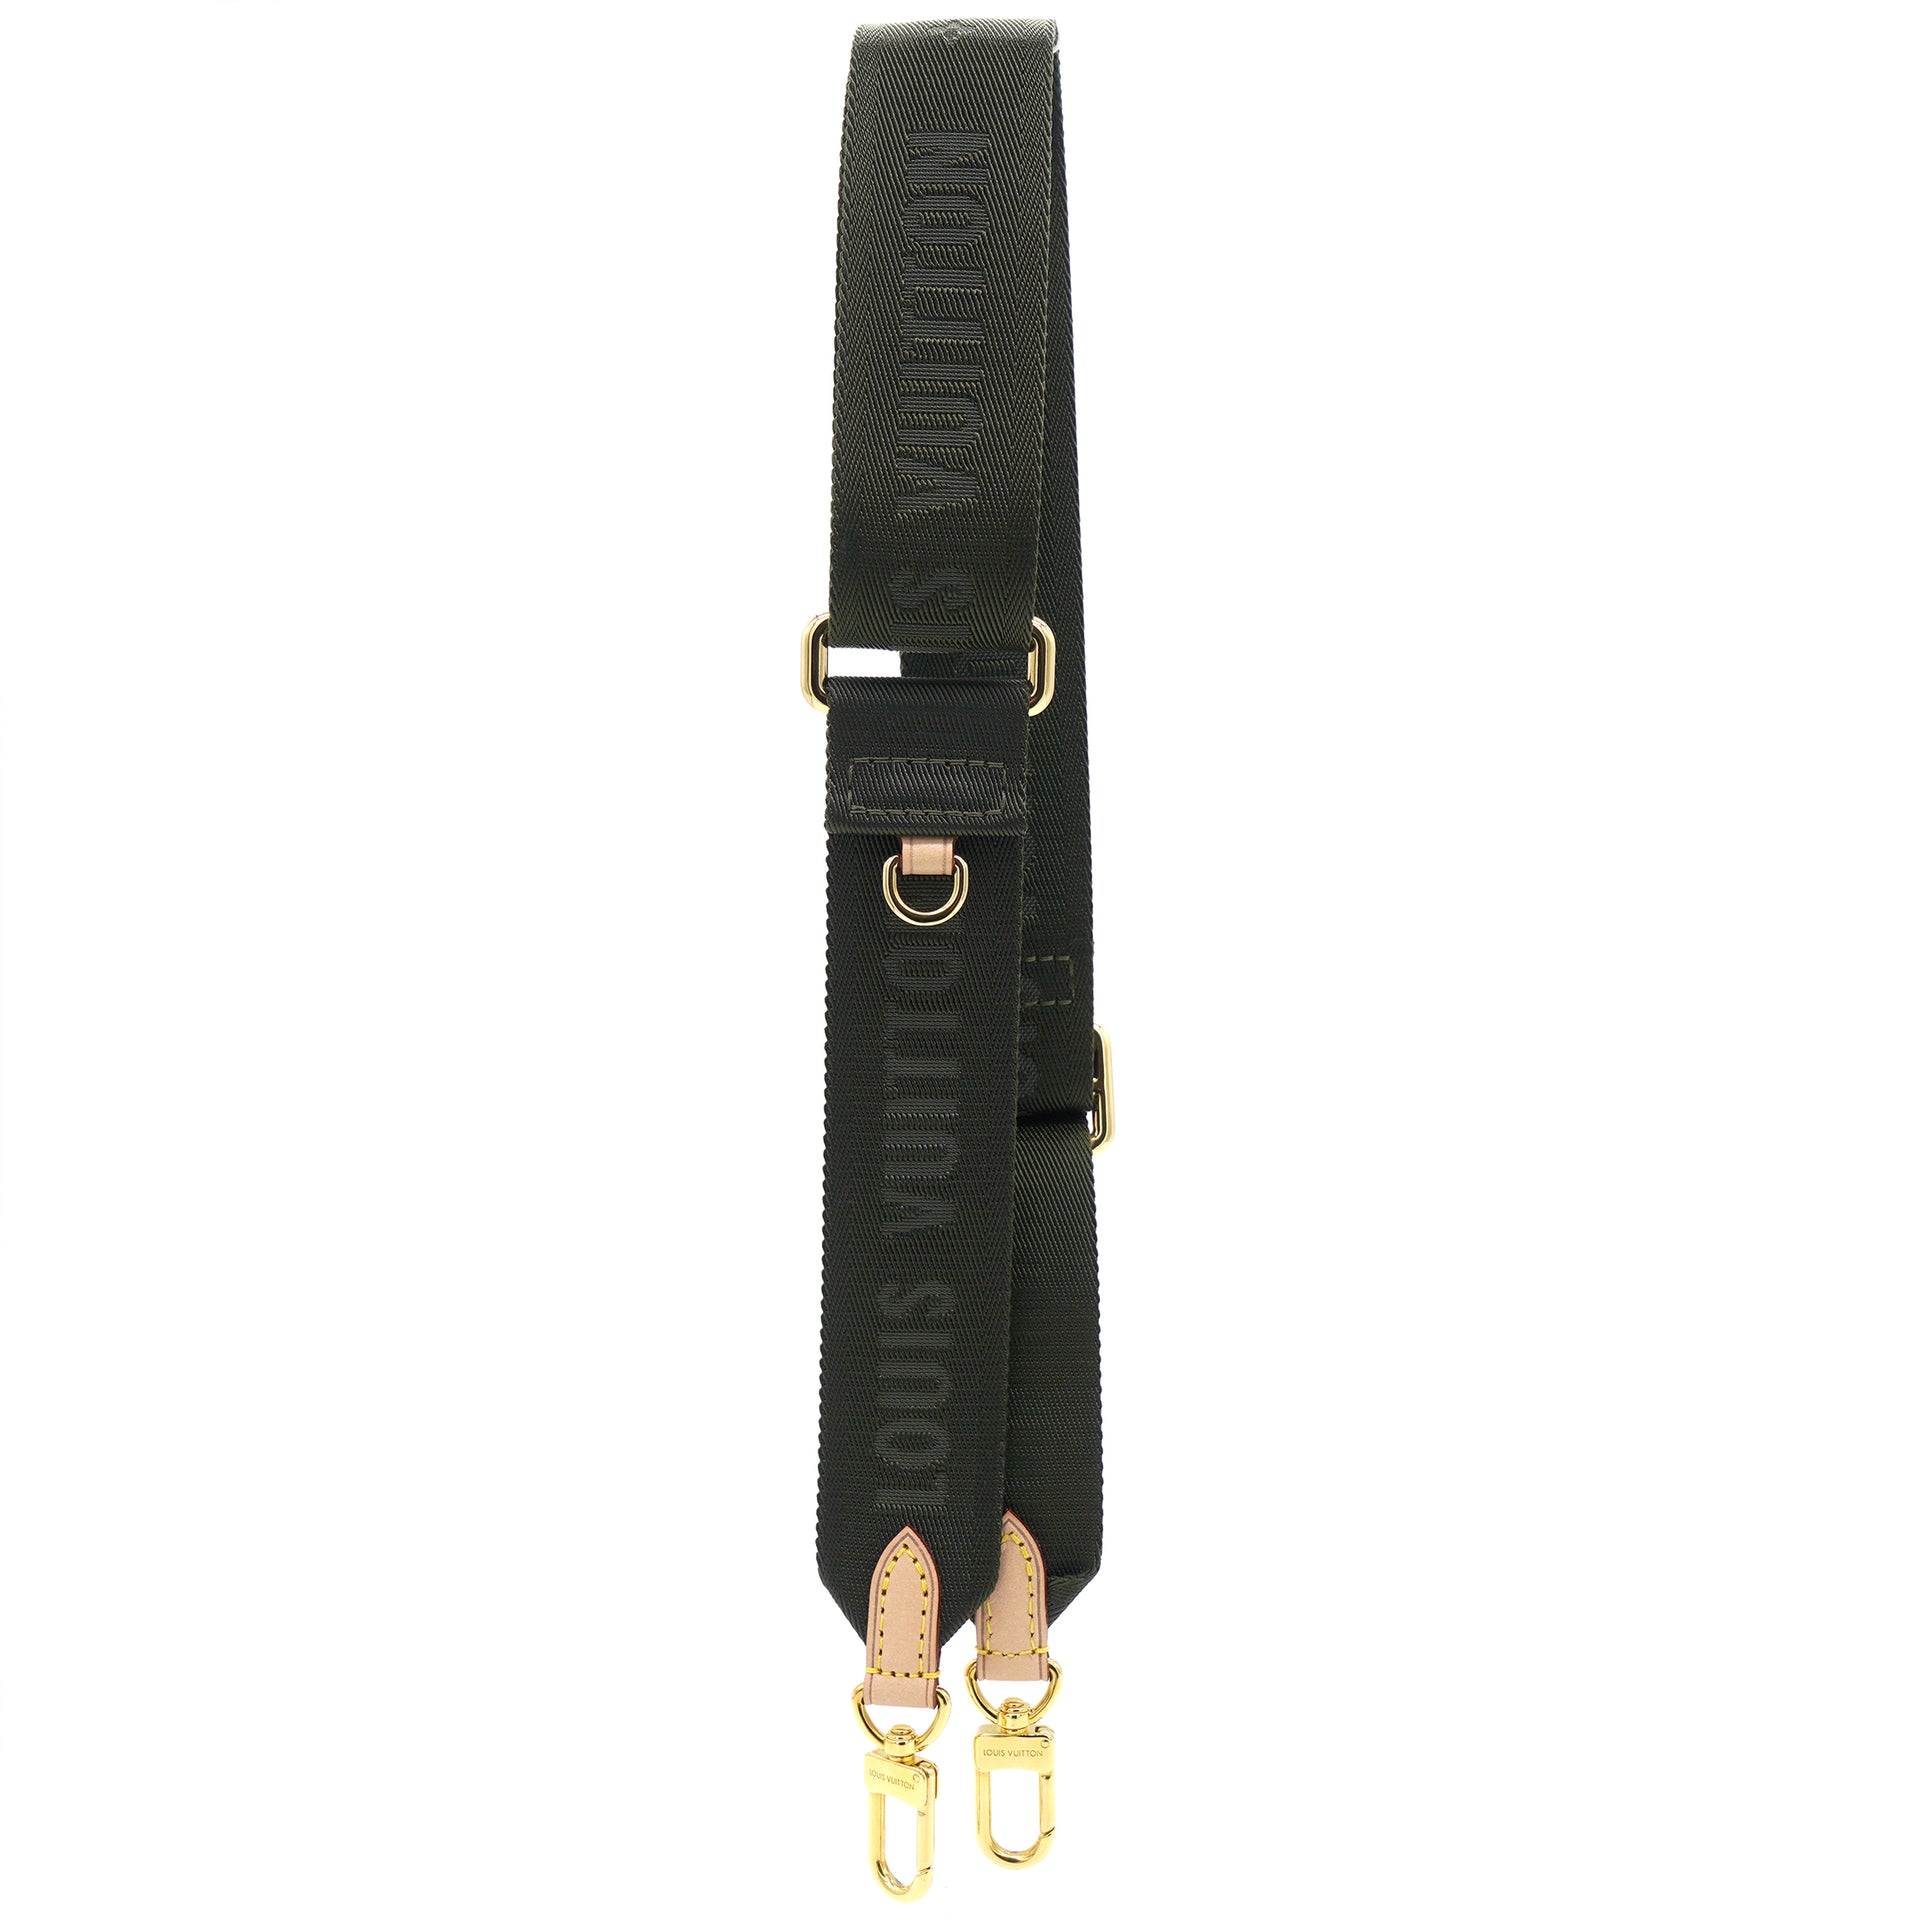 A 12 purse strap for your Louis Vuitton Speedy  Closer Look 